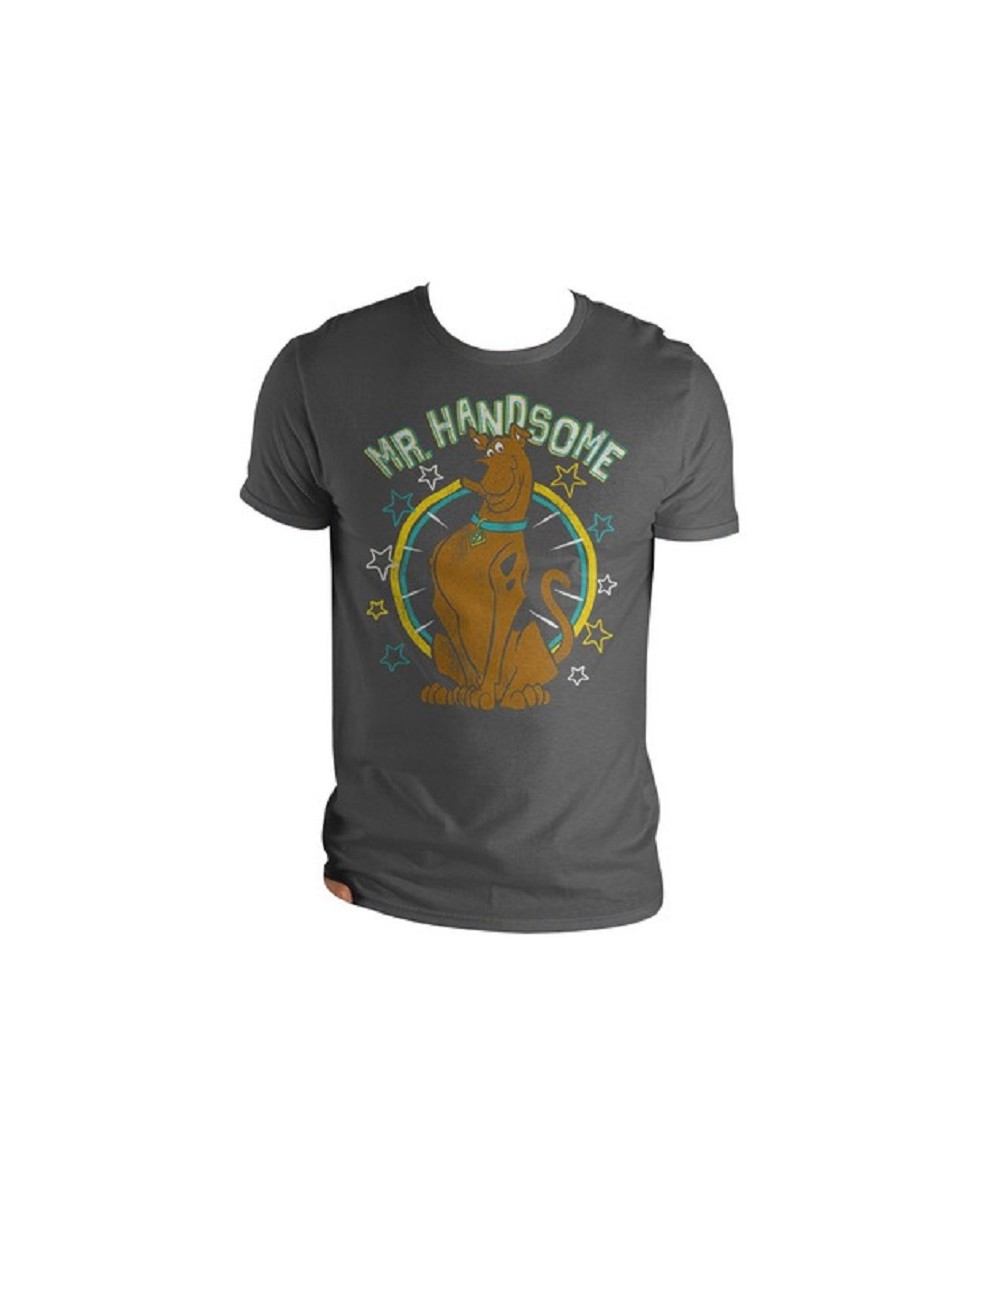 Scooby Doo| Camiseta (Mr. Handsome) 843743120563 JVLAT JVLAT